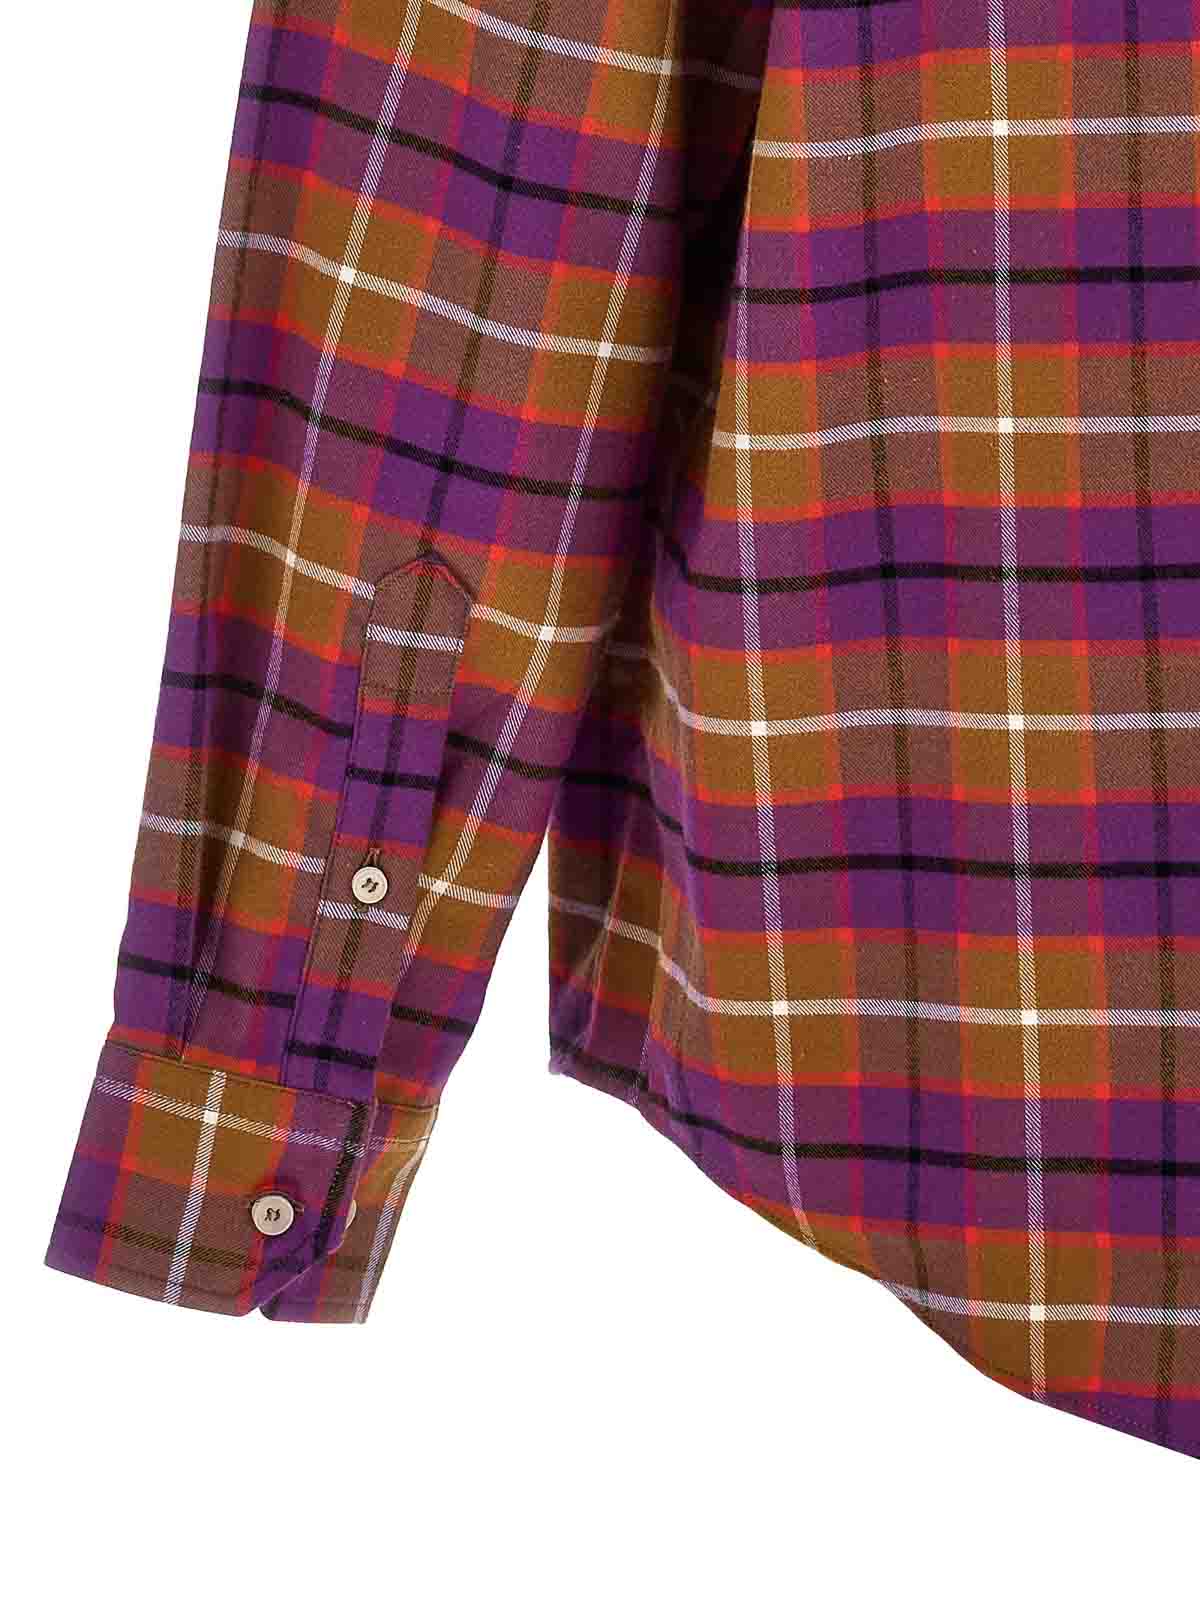 Shop Lc23 Check Flannel Shirt In Multicolour